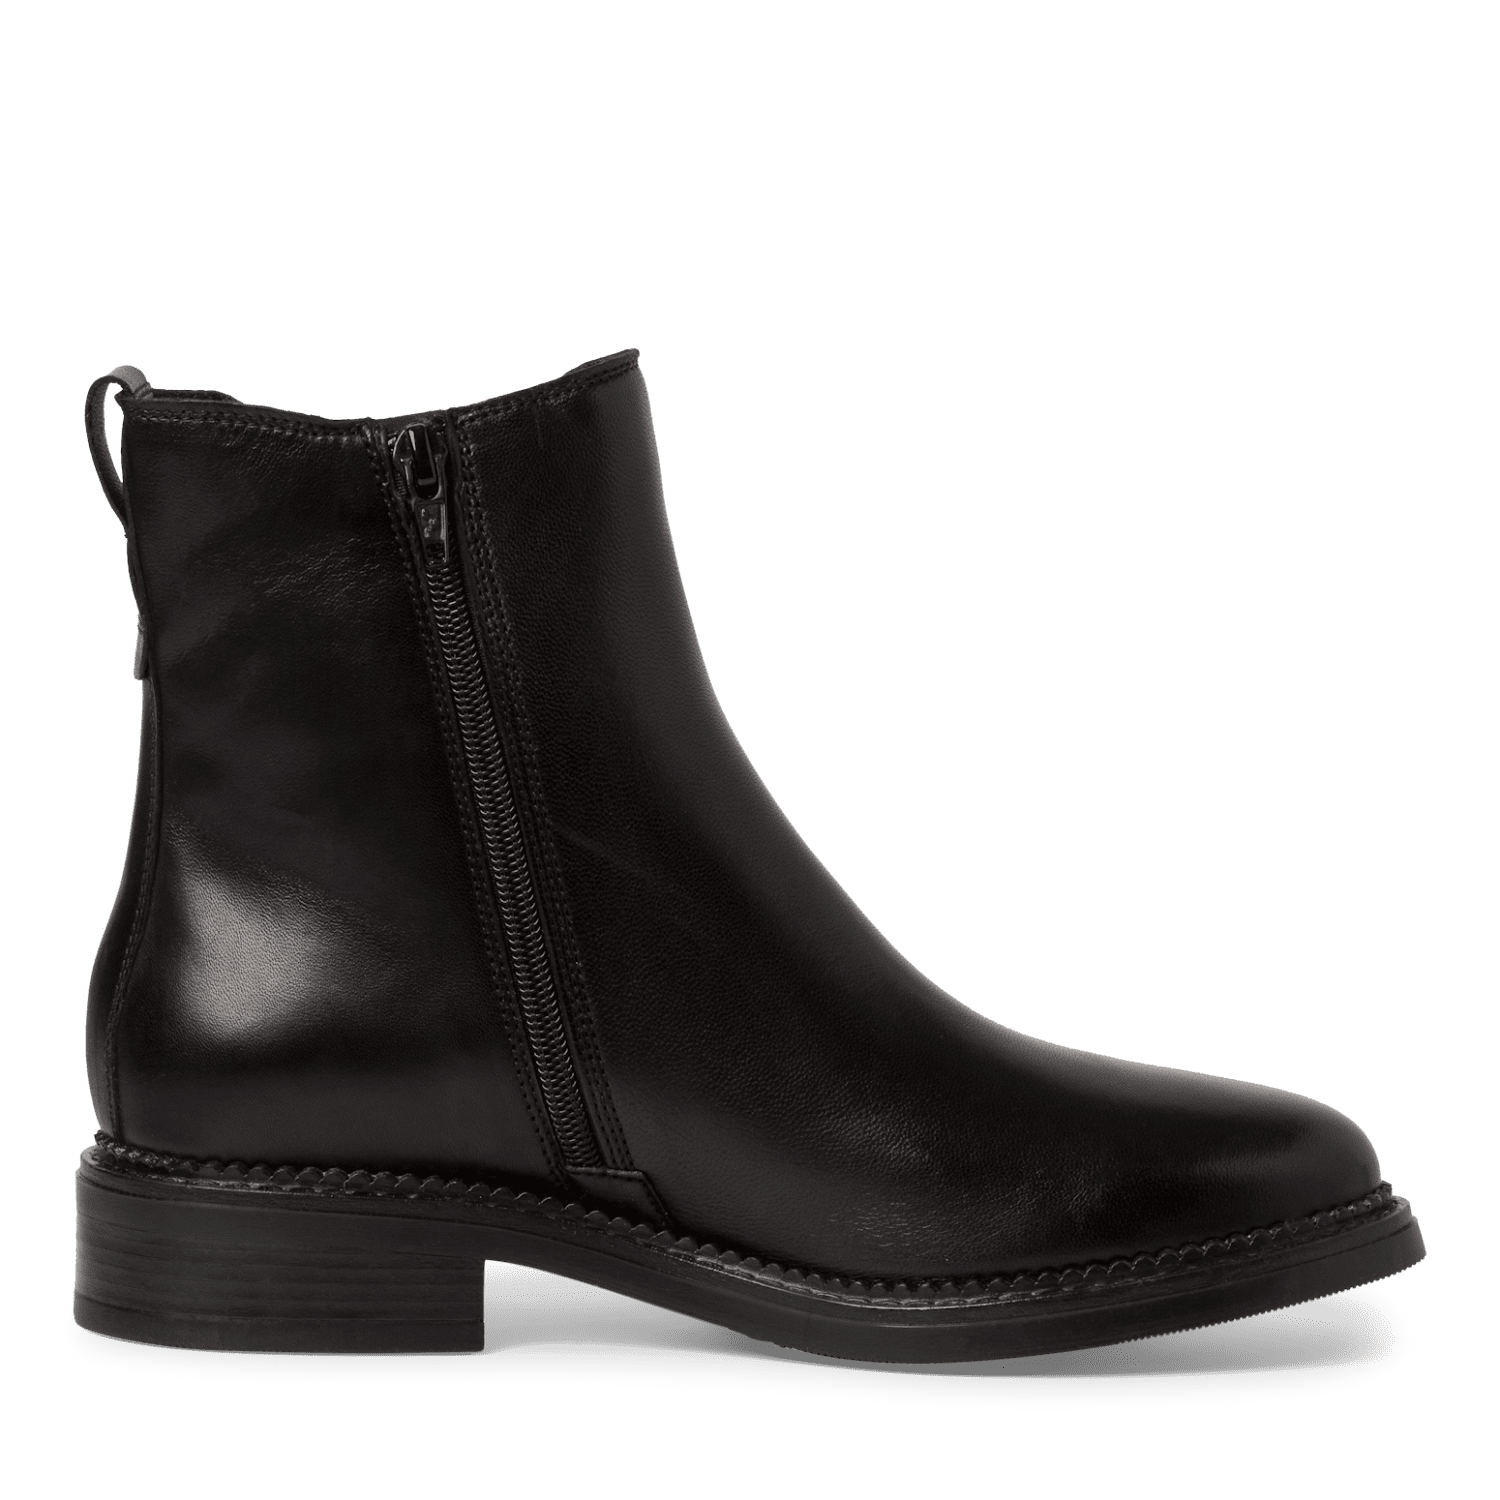 Tamarias 25029 Boot - Black